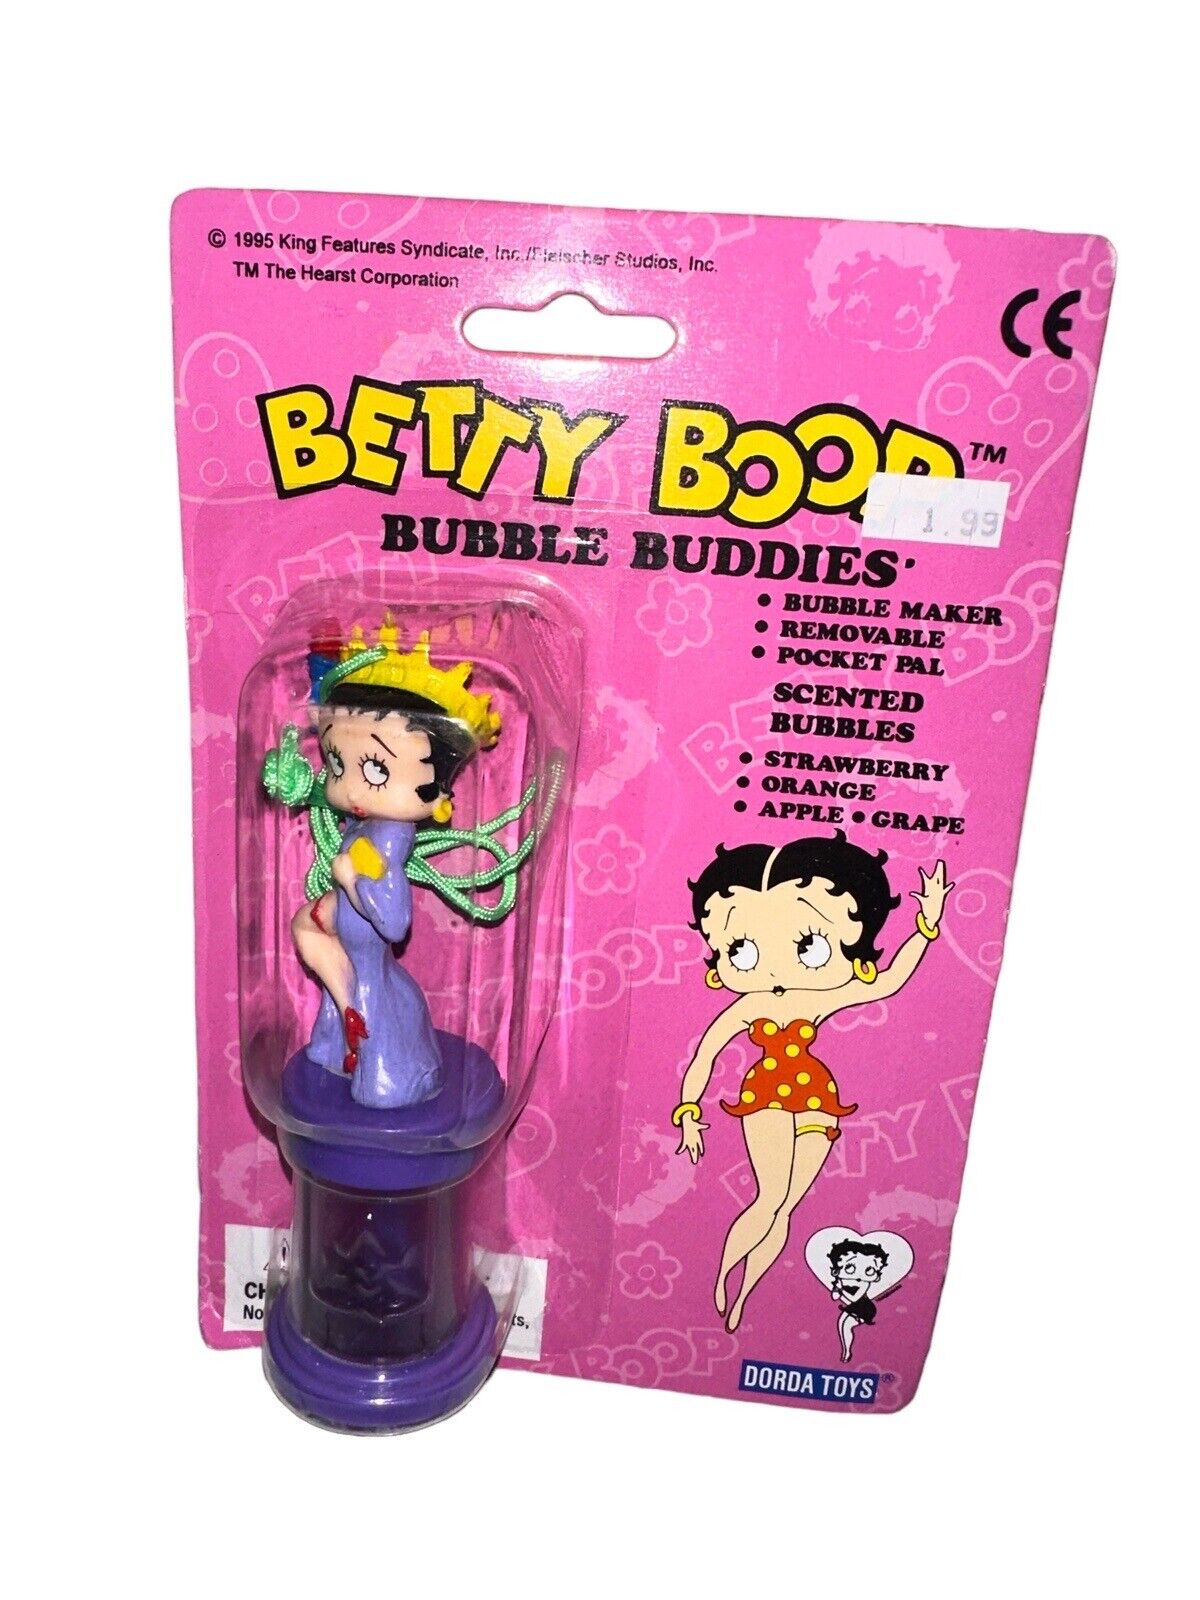 Vintage 1995 Betty Boop Bubble Buddies Bubble Maker Dorda Toys Crown Betty